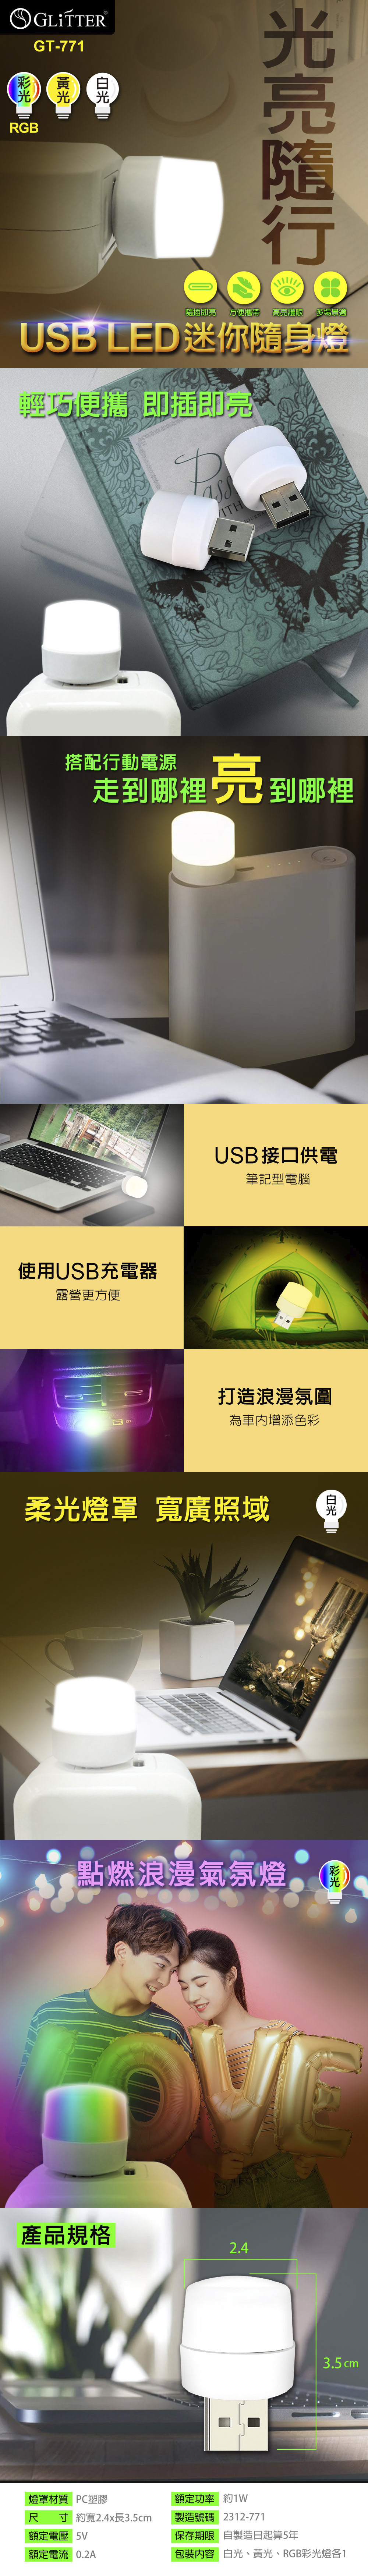 USB LED 迷你 USB LED 壁燈